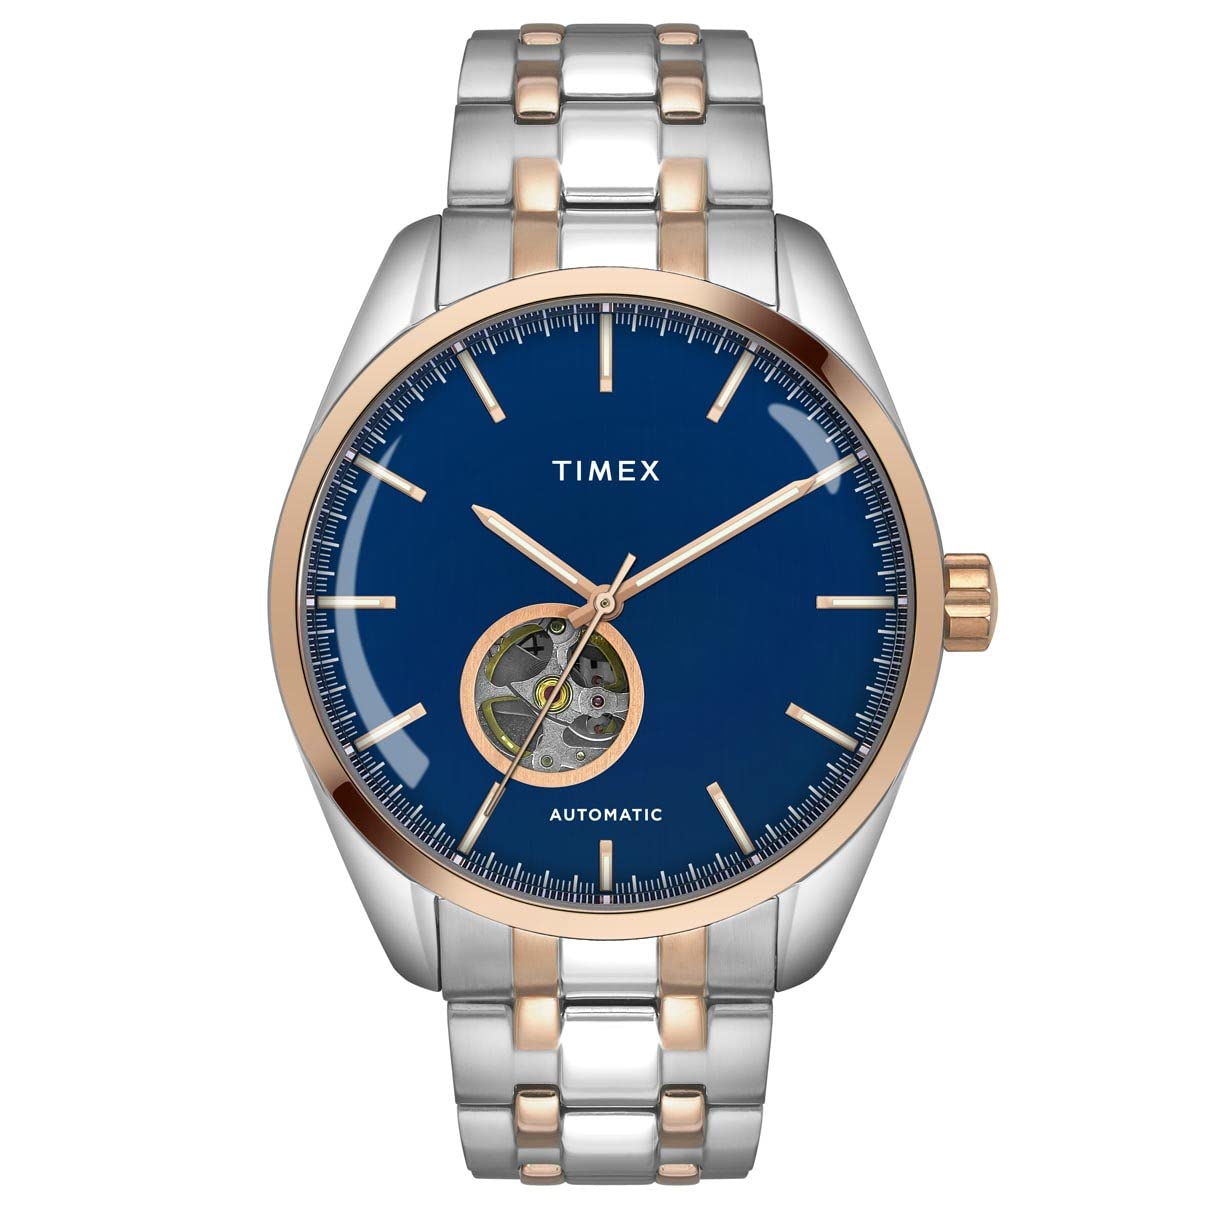 TIMEX Automatic Analog Blue Dial Men's Smart Watch - TWEG17506